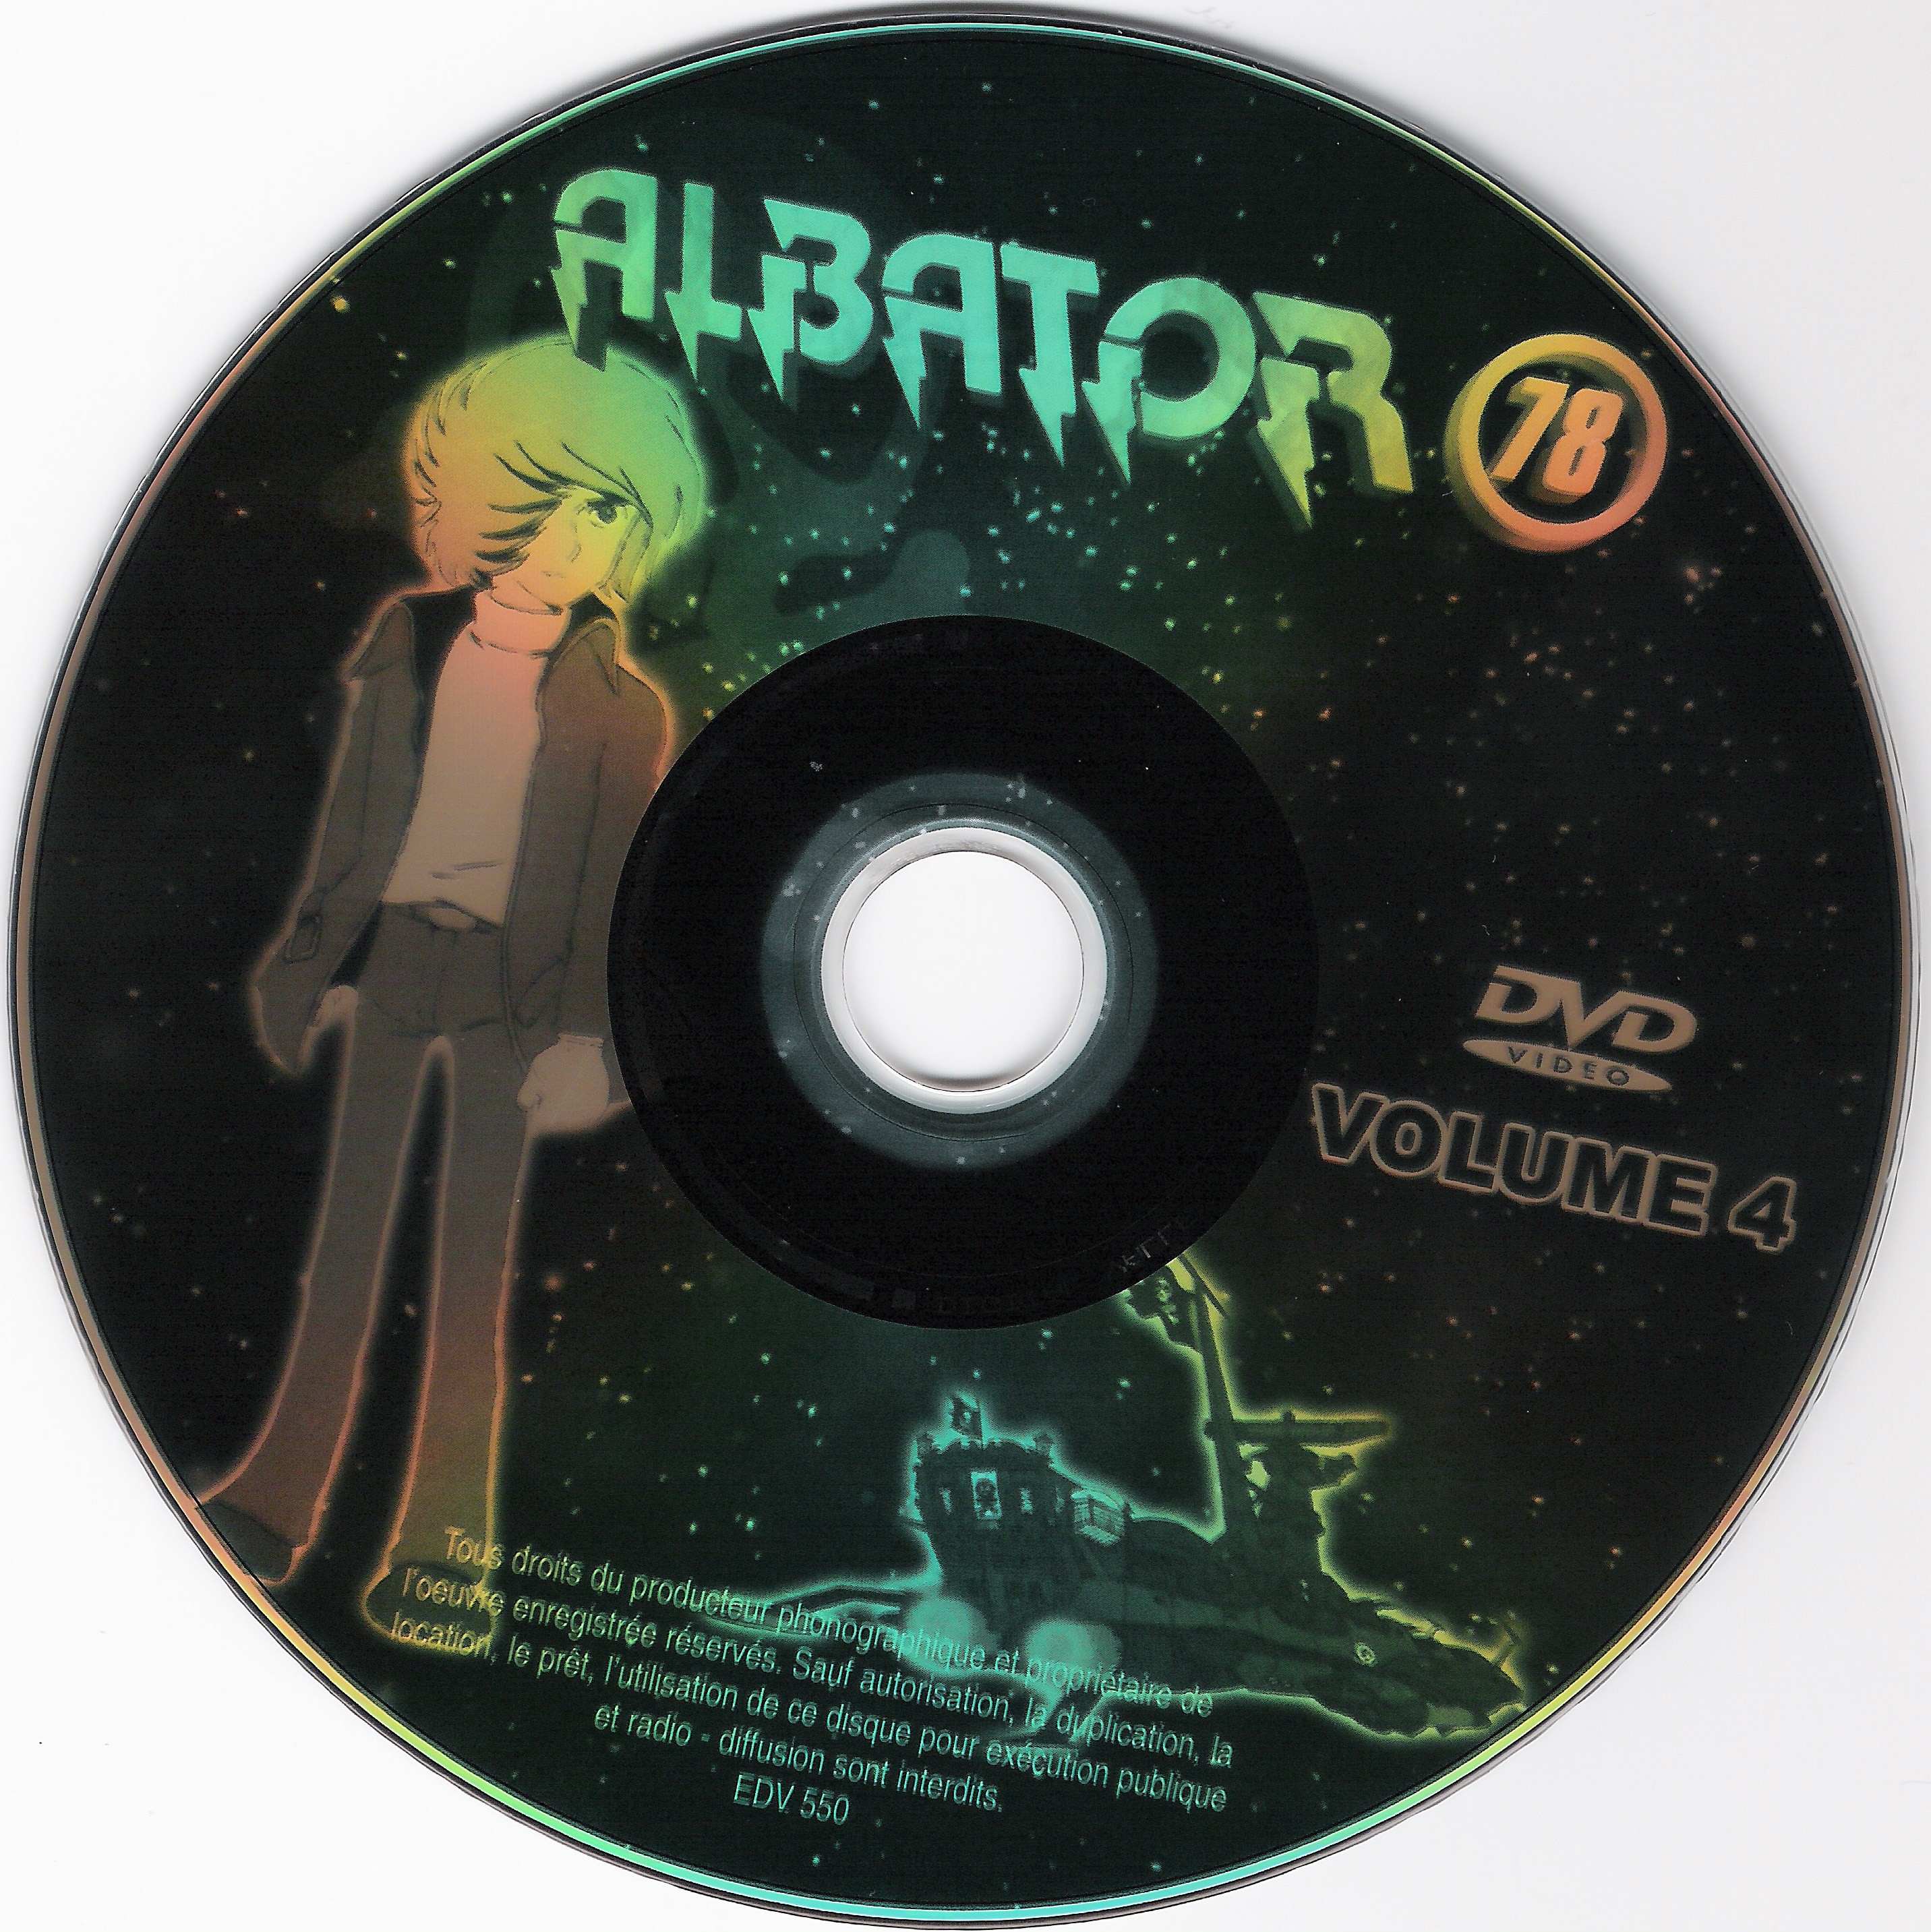 Albator 78 vol 4 (GENERATION DVD)